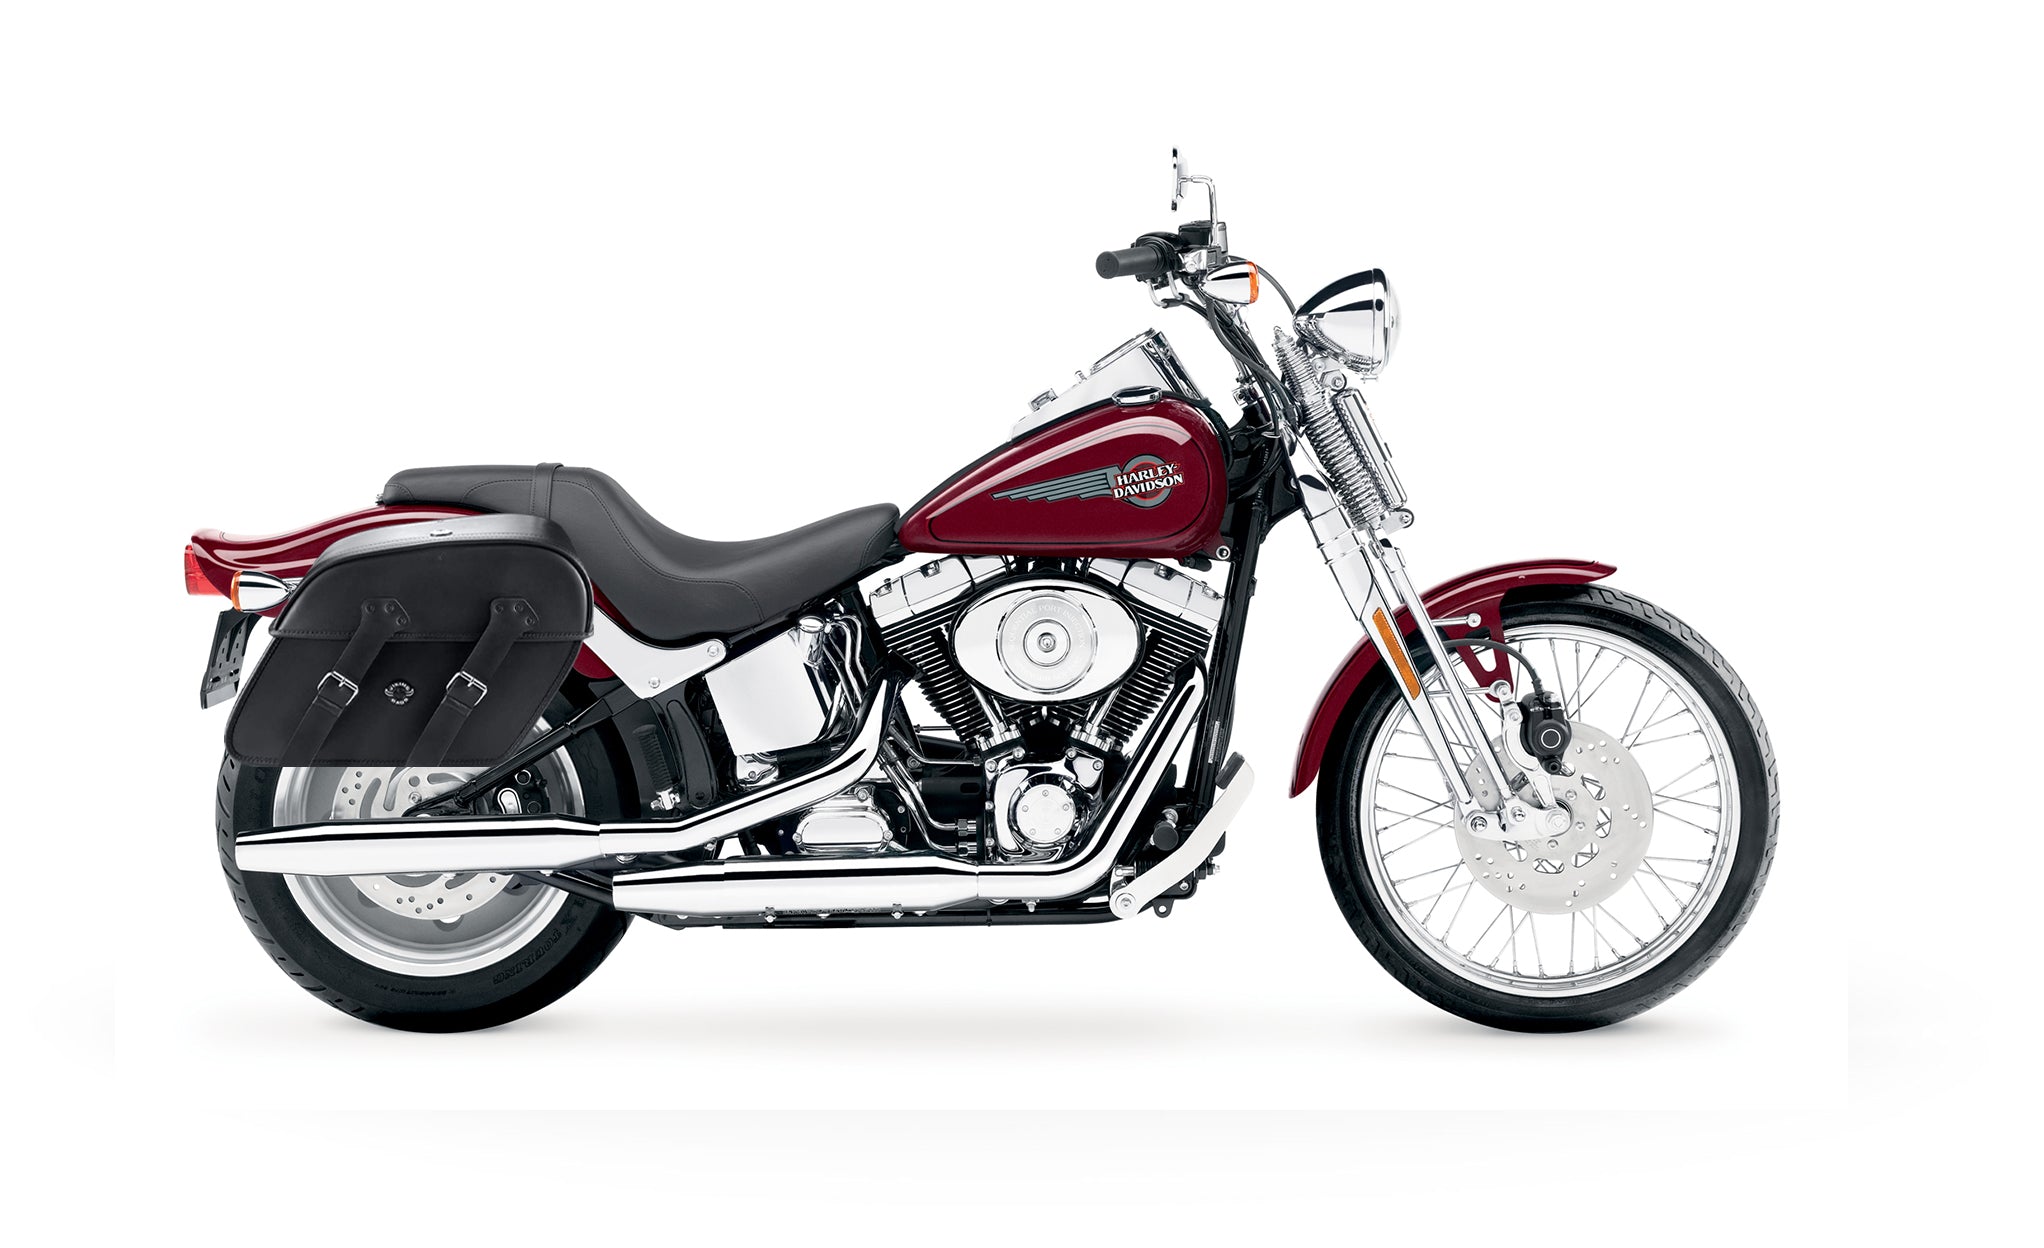 Viking Raven Large Motorcycle Leather Saddlebags For Harley Softail Springer Fxsts I on Bike Photo @expand